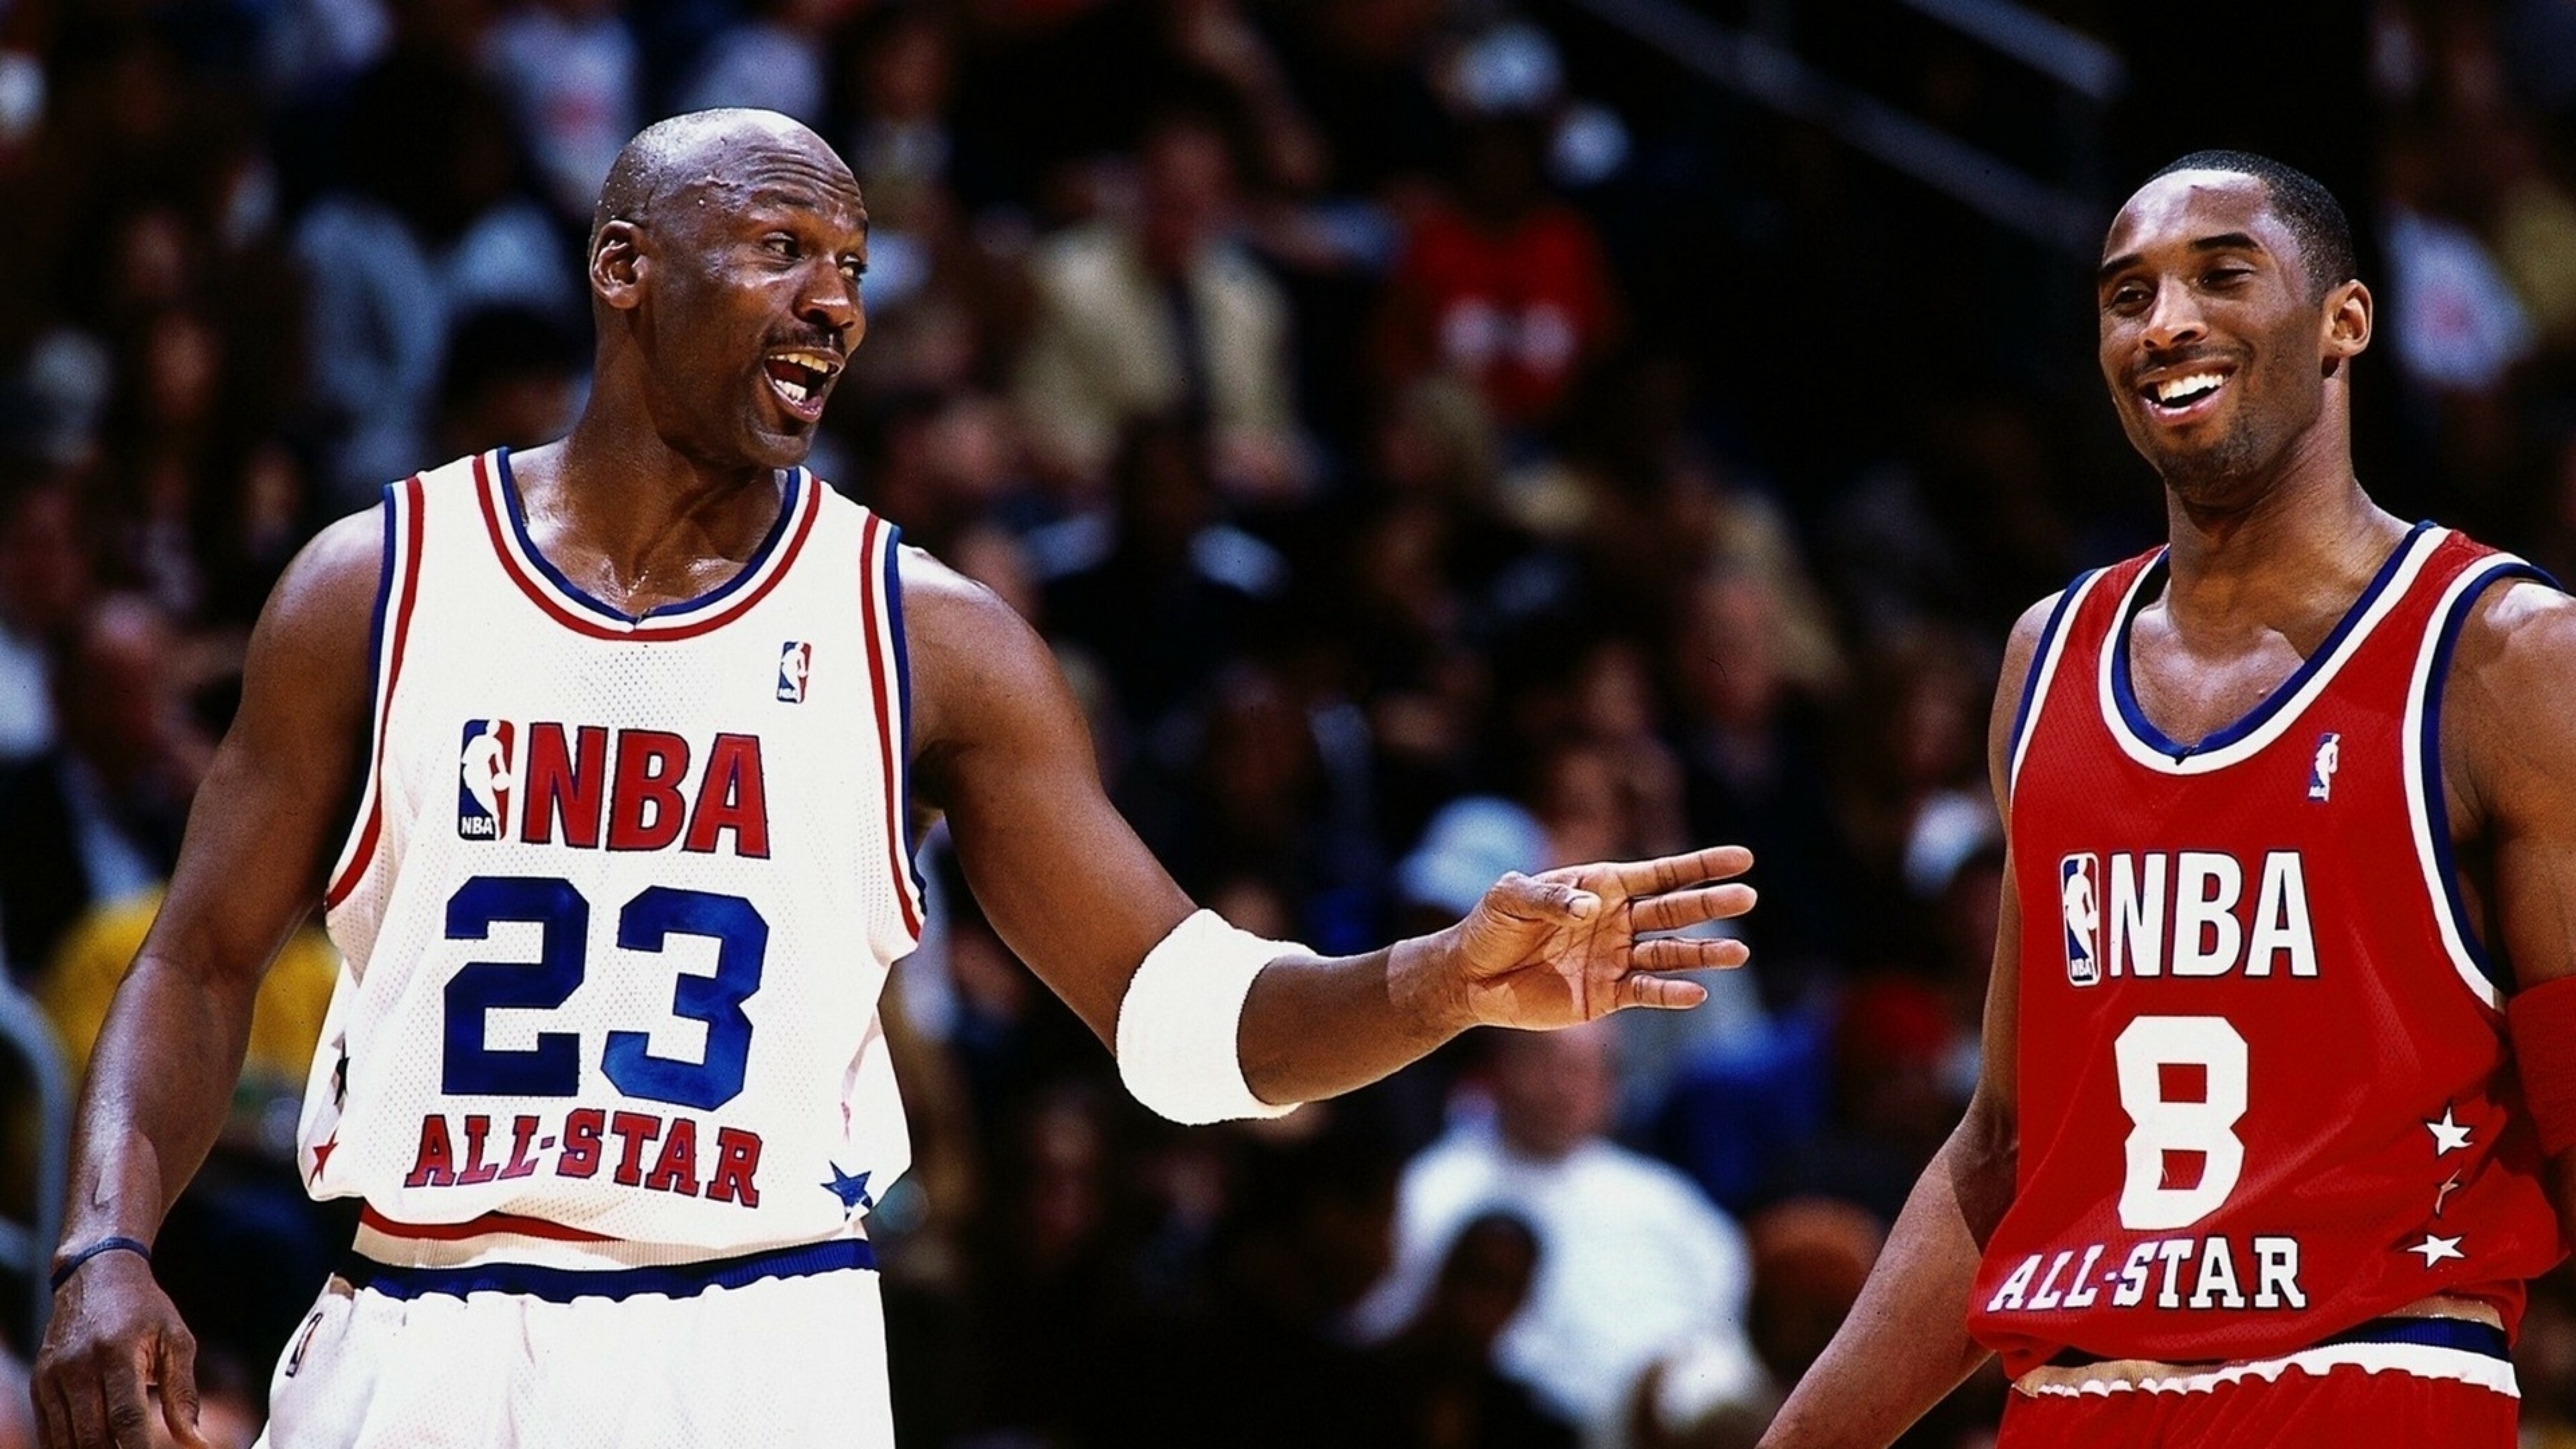 Kobe Bryant: He won five NBA championships and was an 18-time All-Star, Michael Jordan. 3840x2160 4K Background.